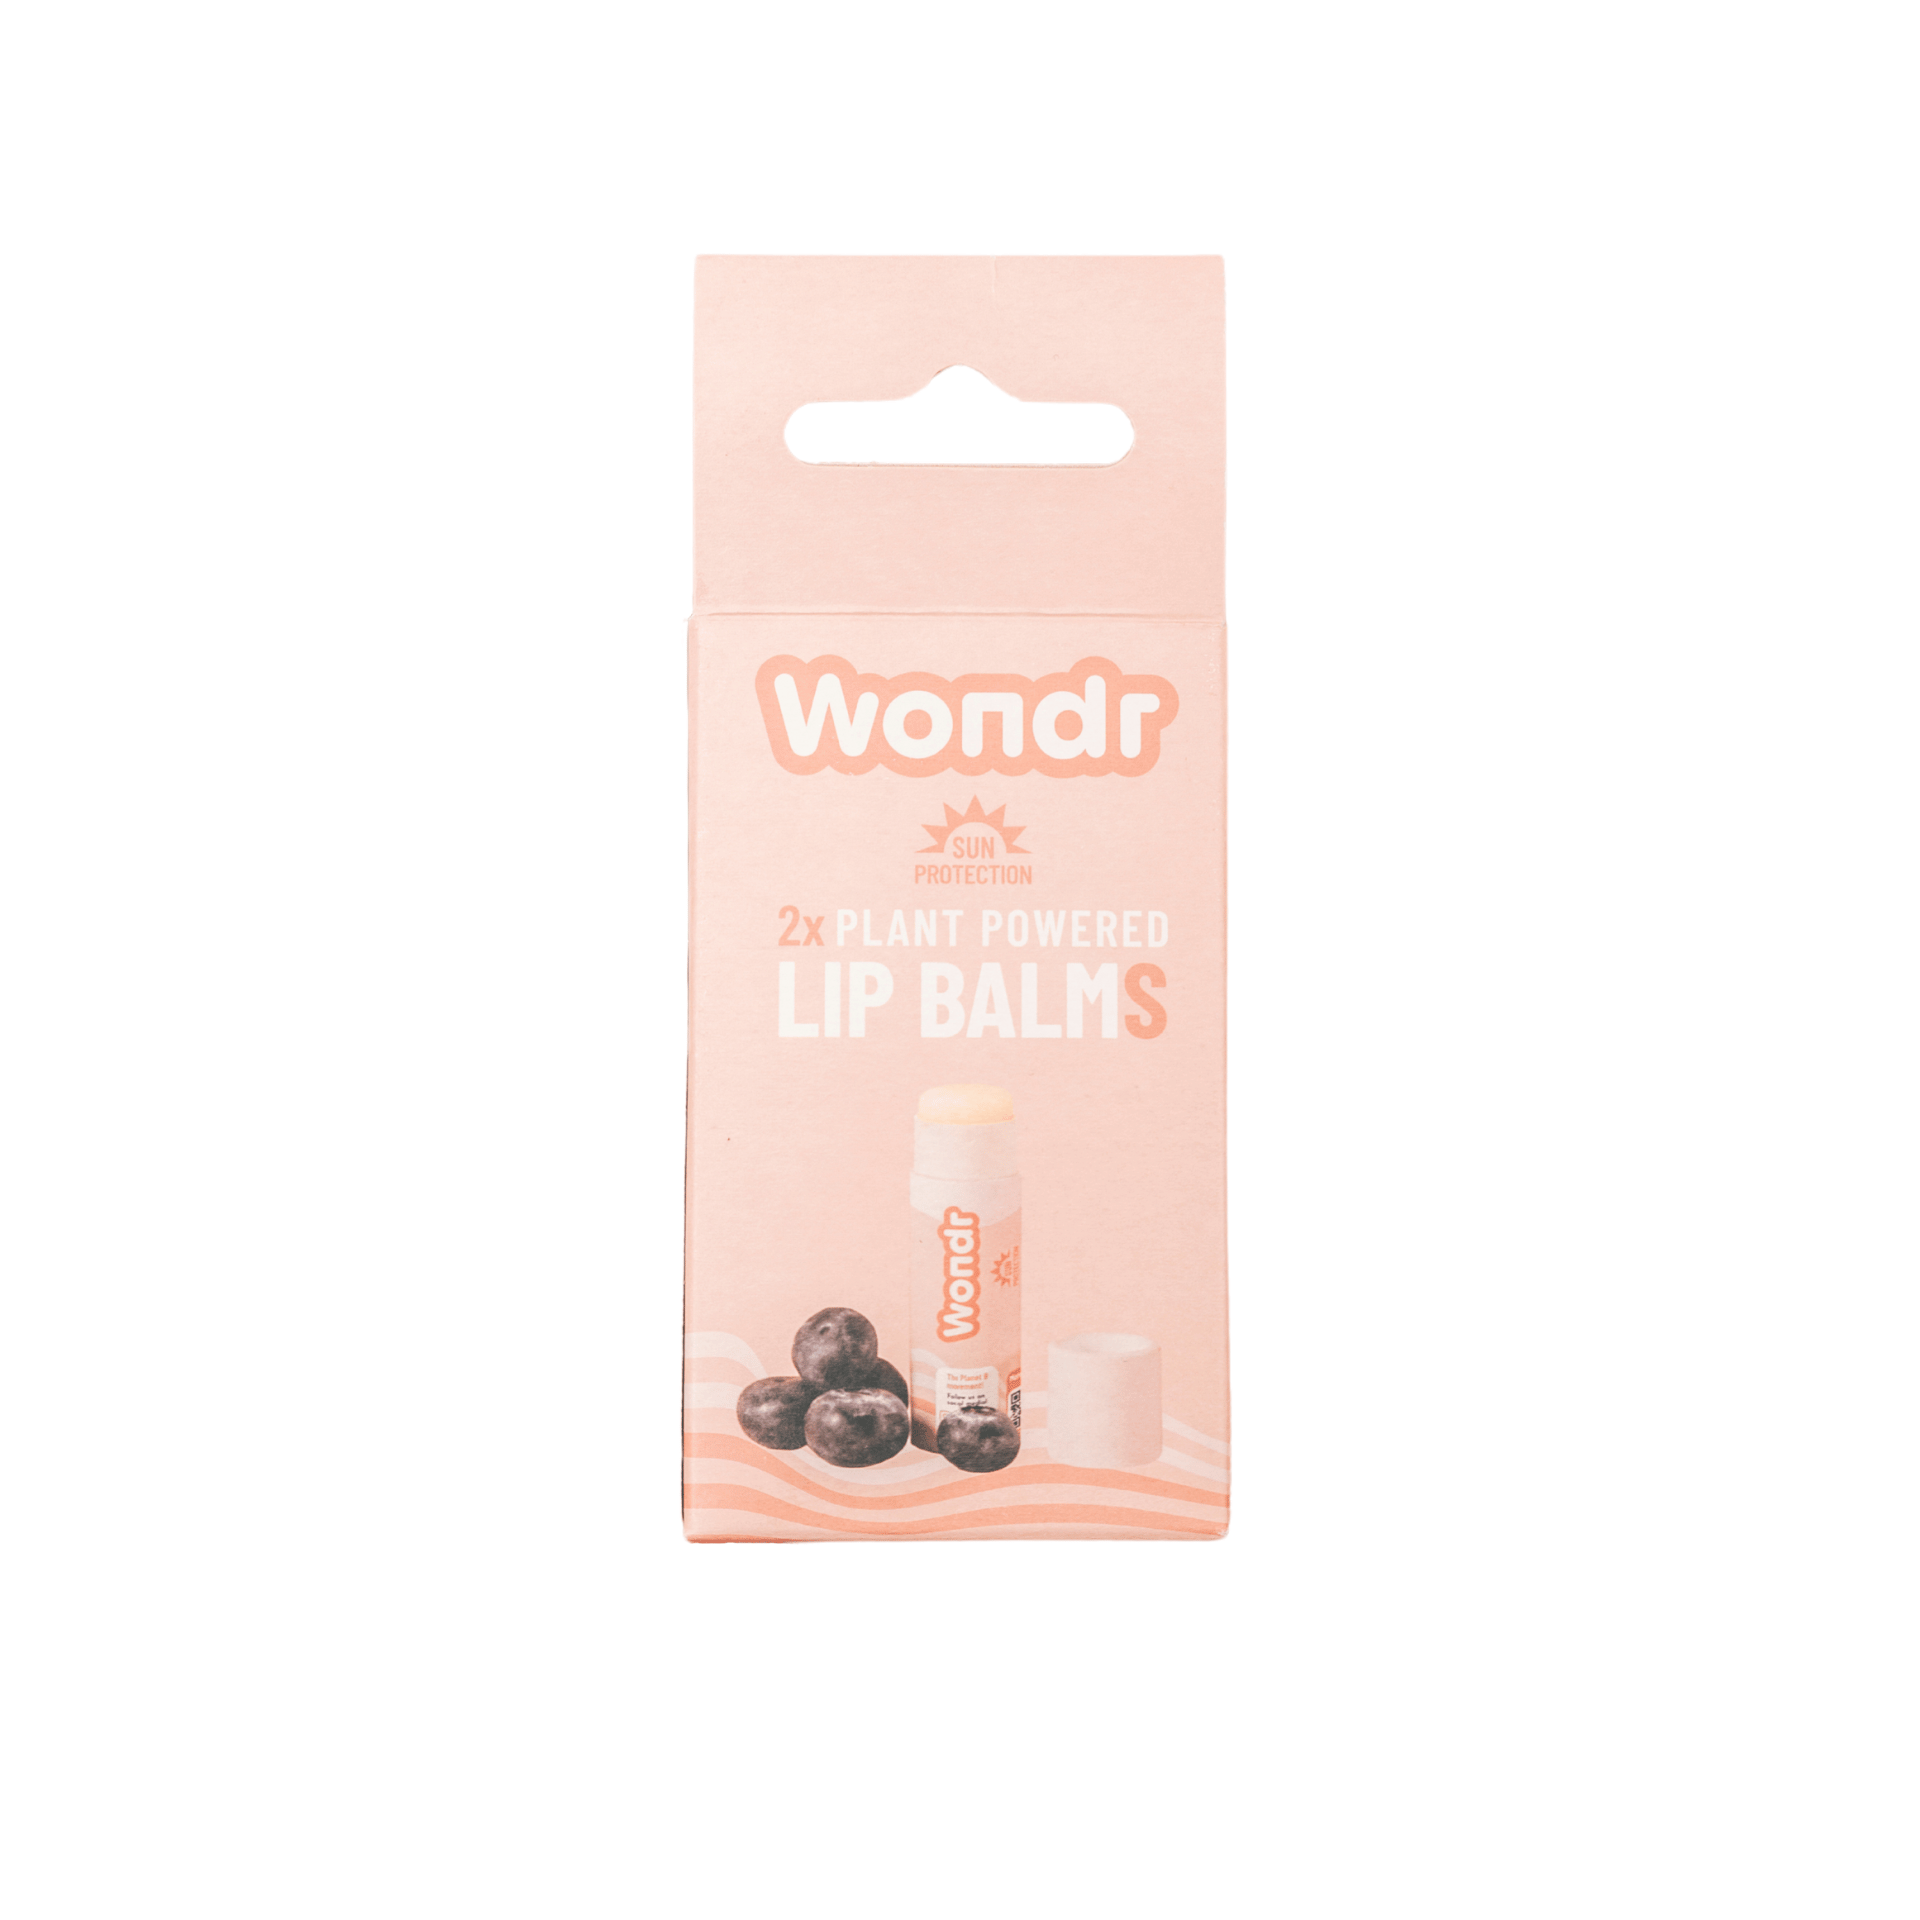 WONDR Plant Powered Lip Balm Duopack